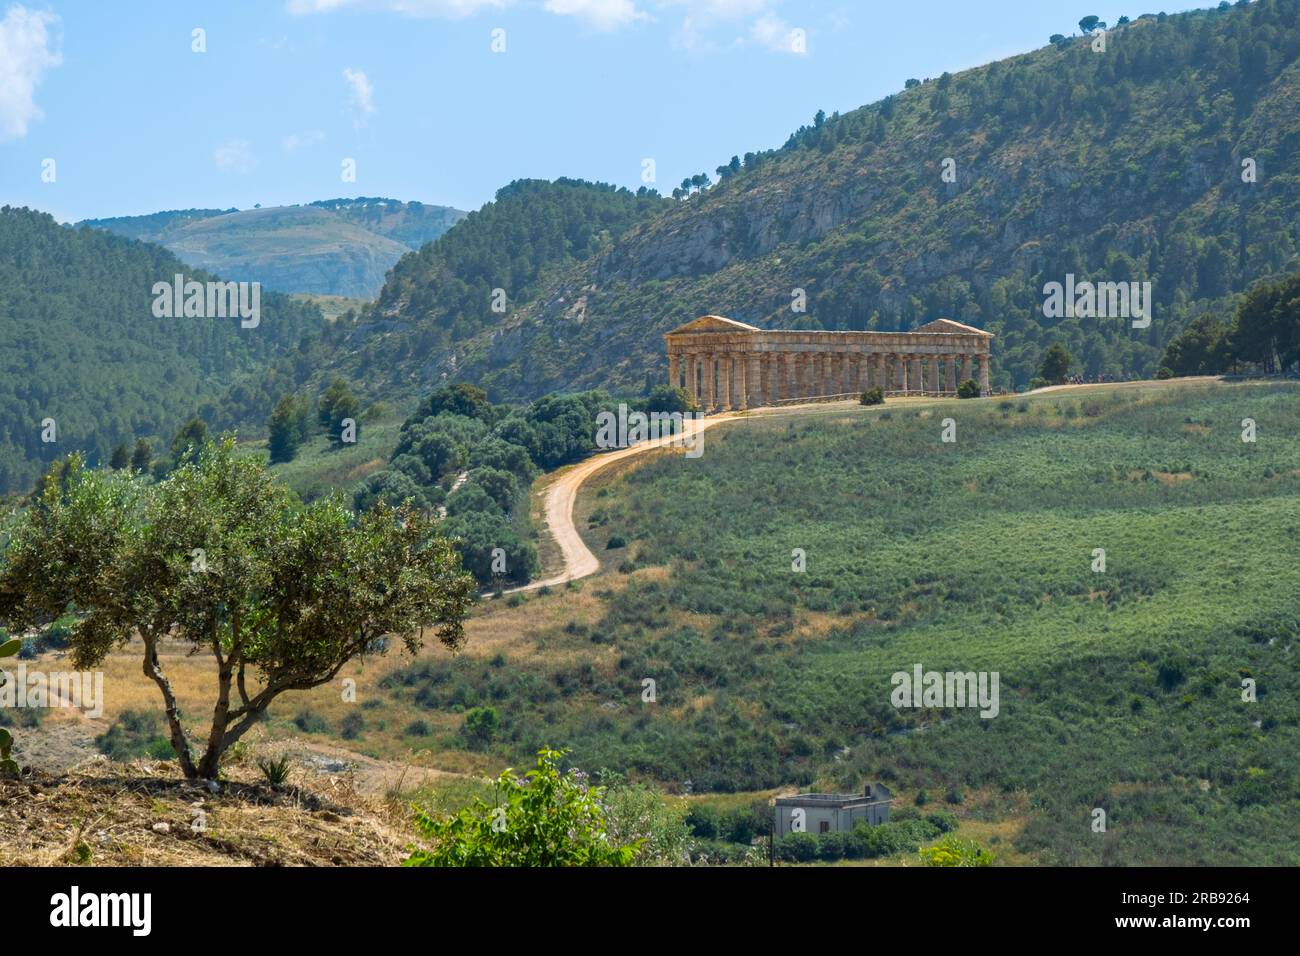 The Doric temple of Segesta. Segesta, Calatafimi, Trapani, Sicily, Italy, Europe. Stock Photo